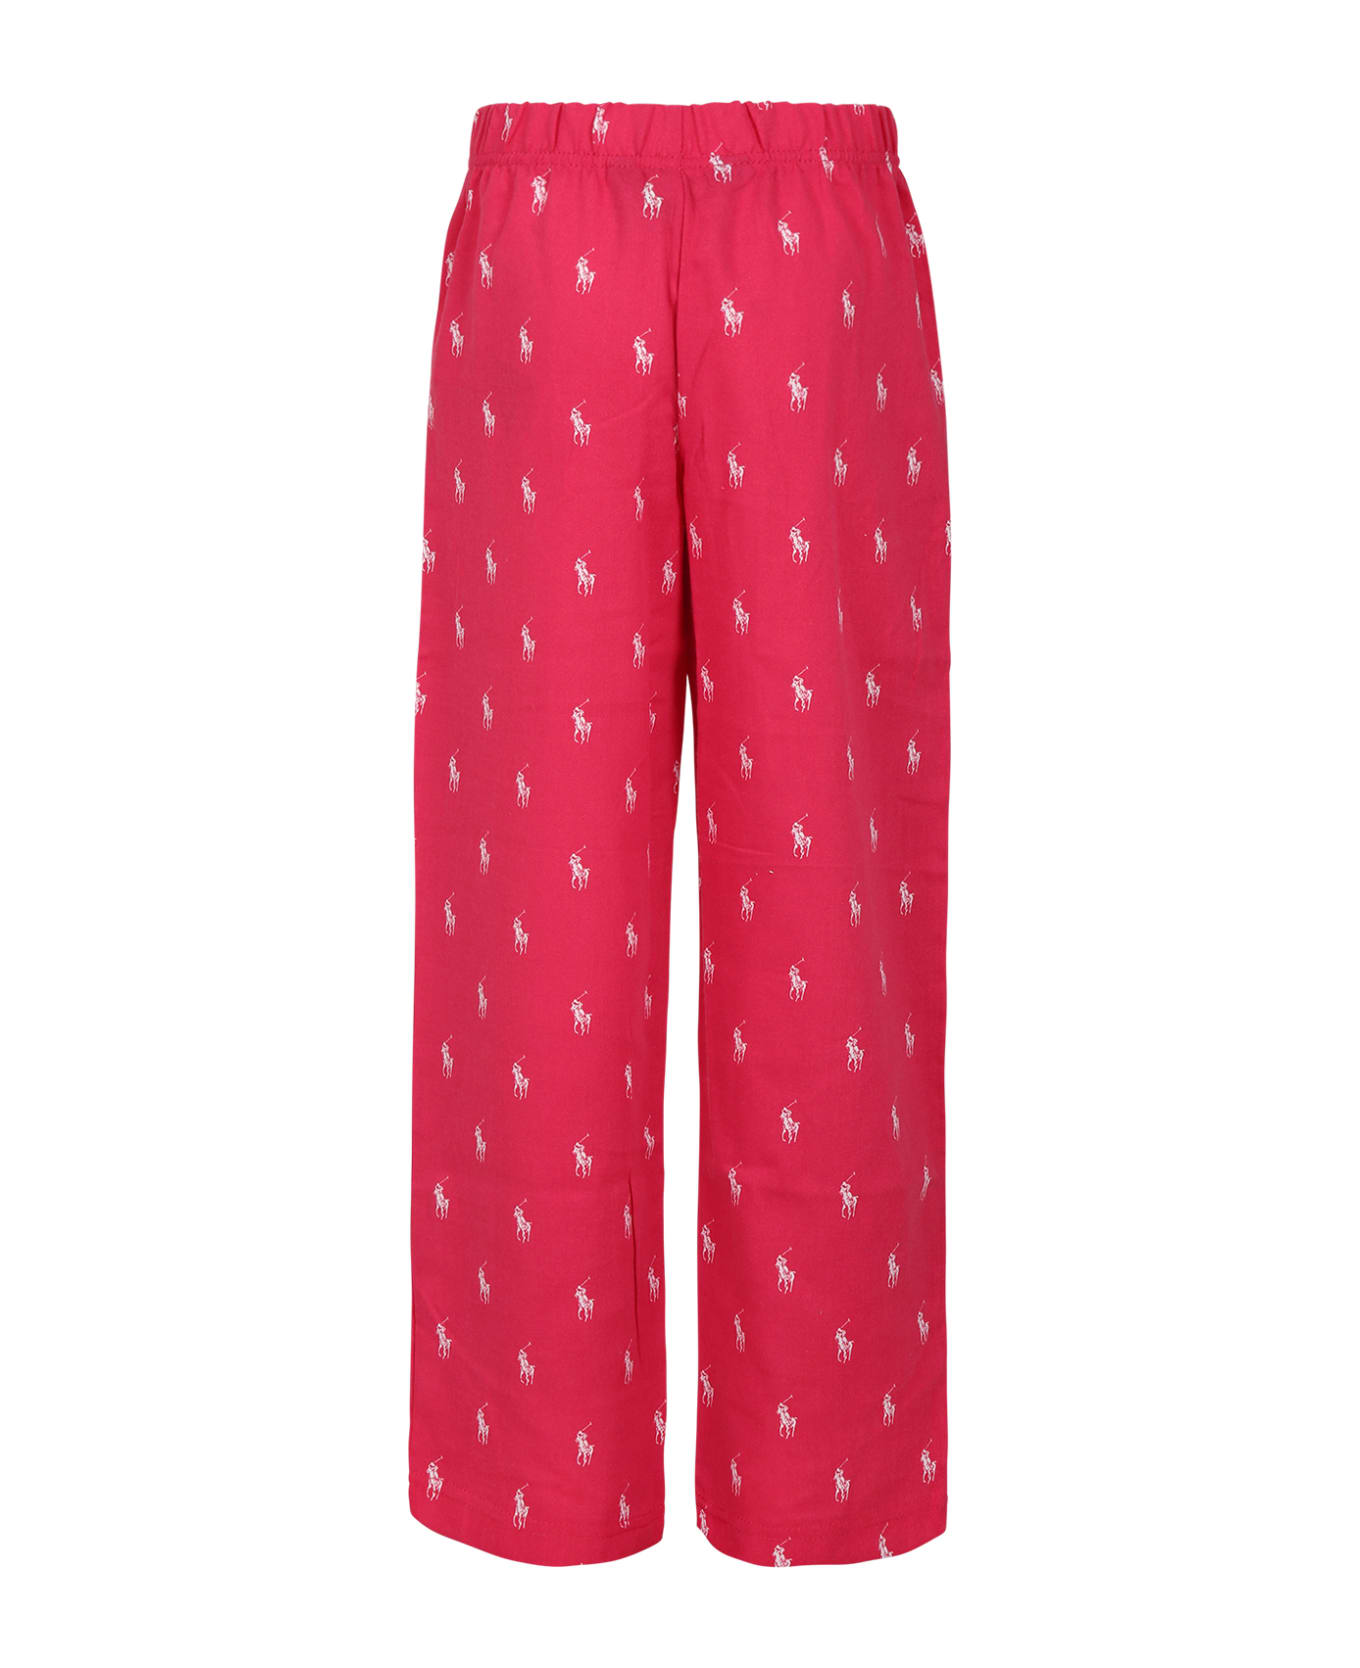 Ralph Lauren Fuchsia Pajamas Pants For Girl - Fuchsia